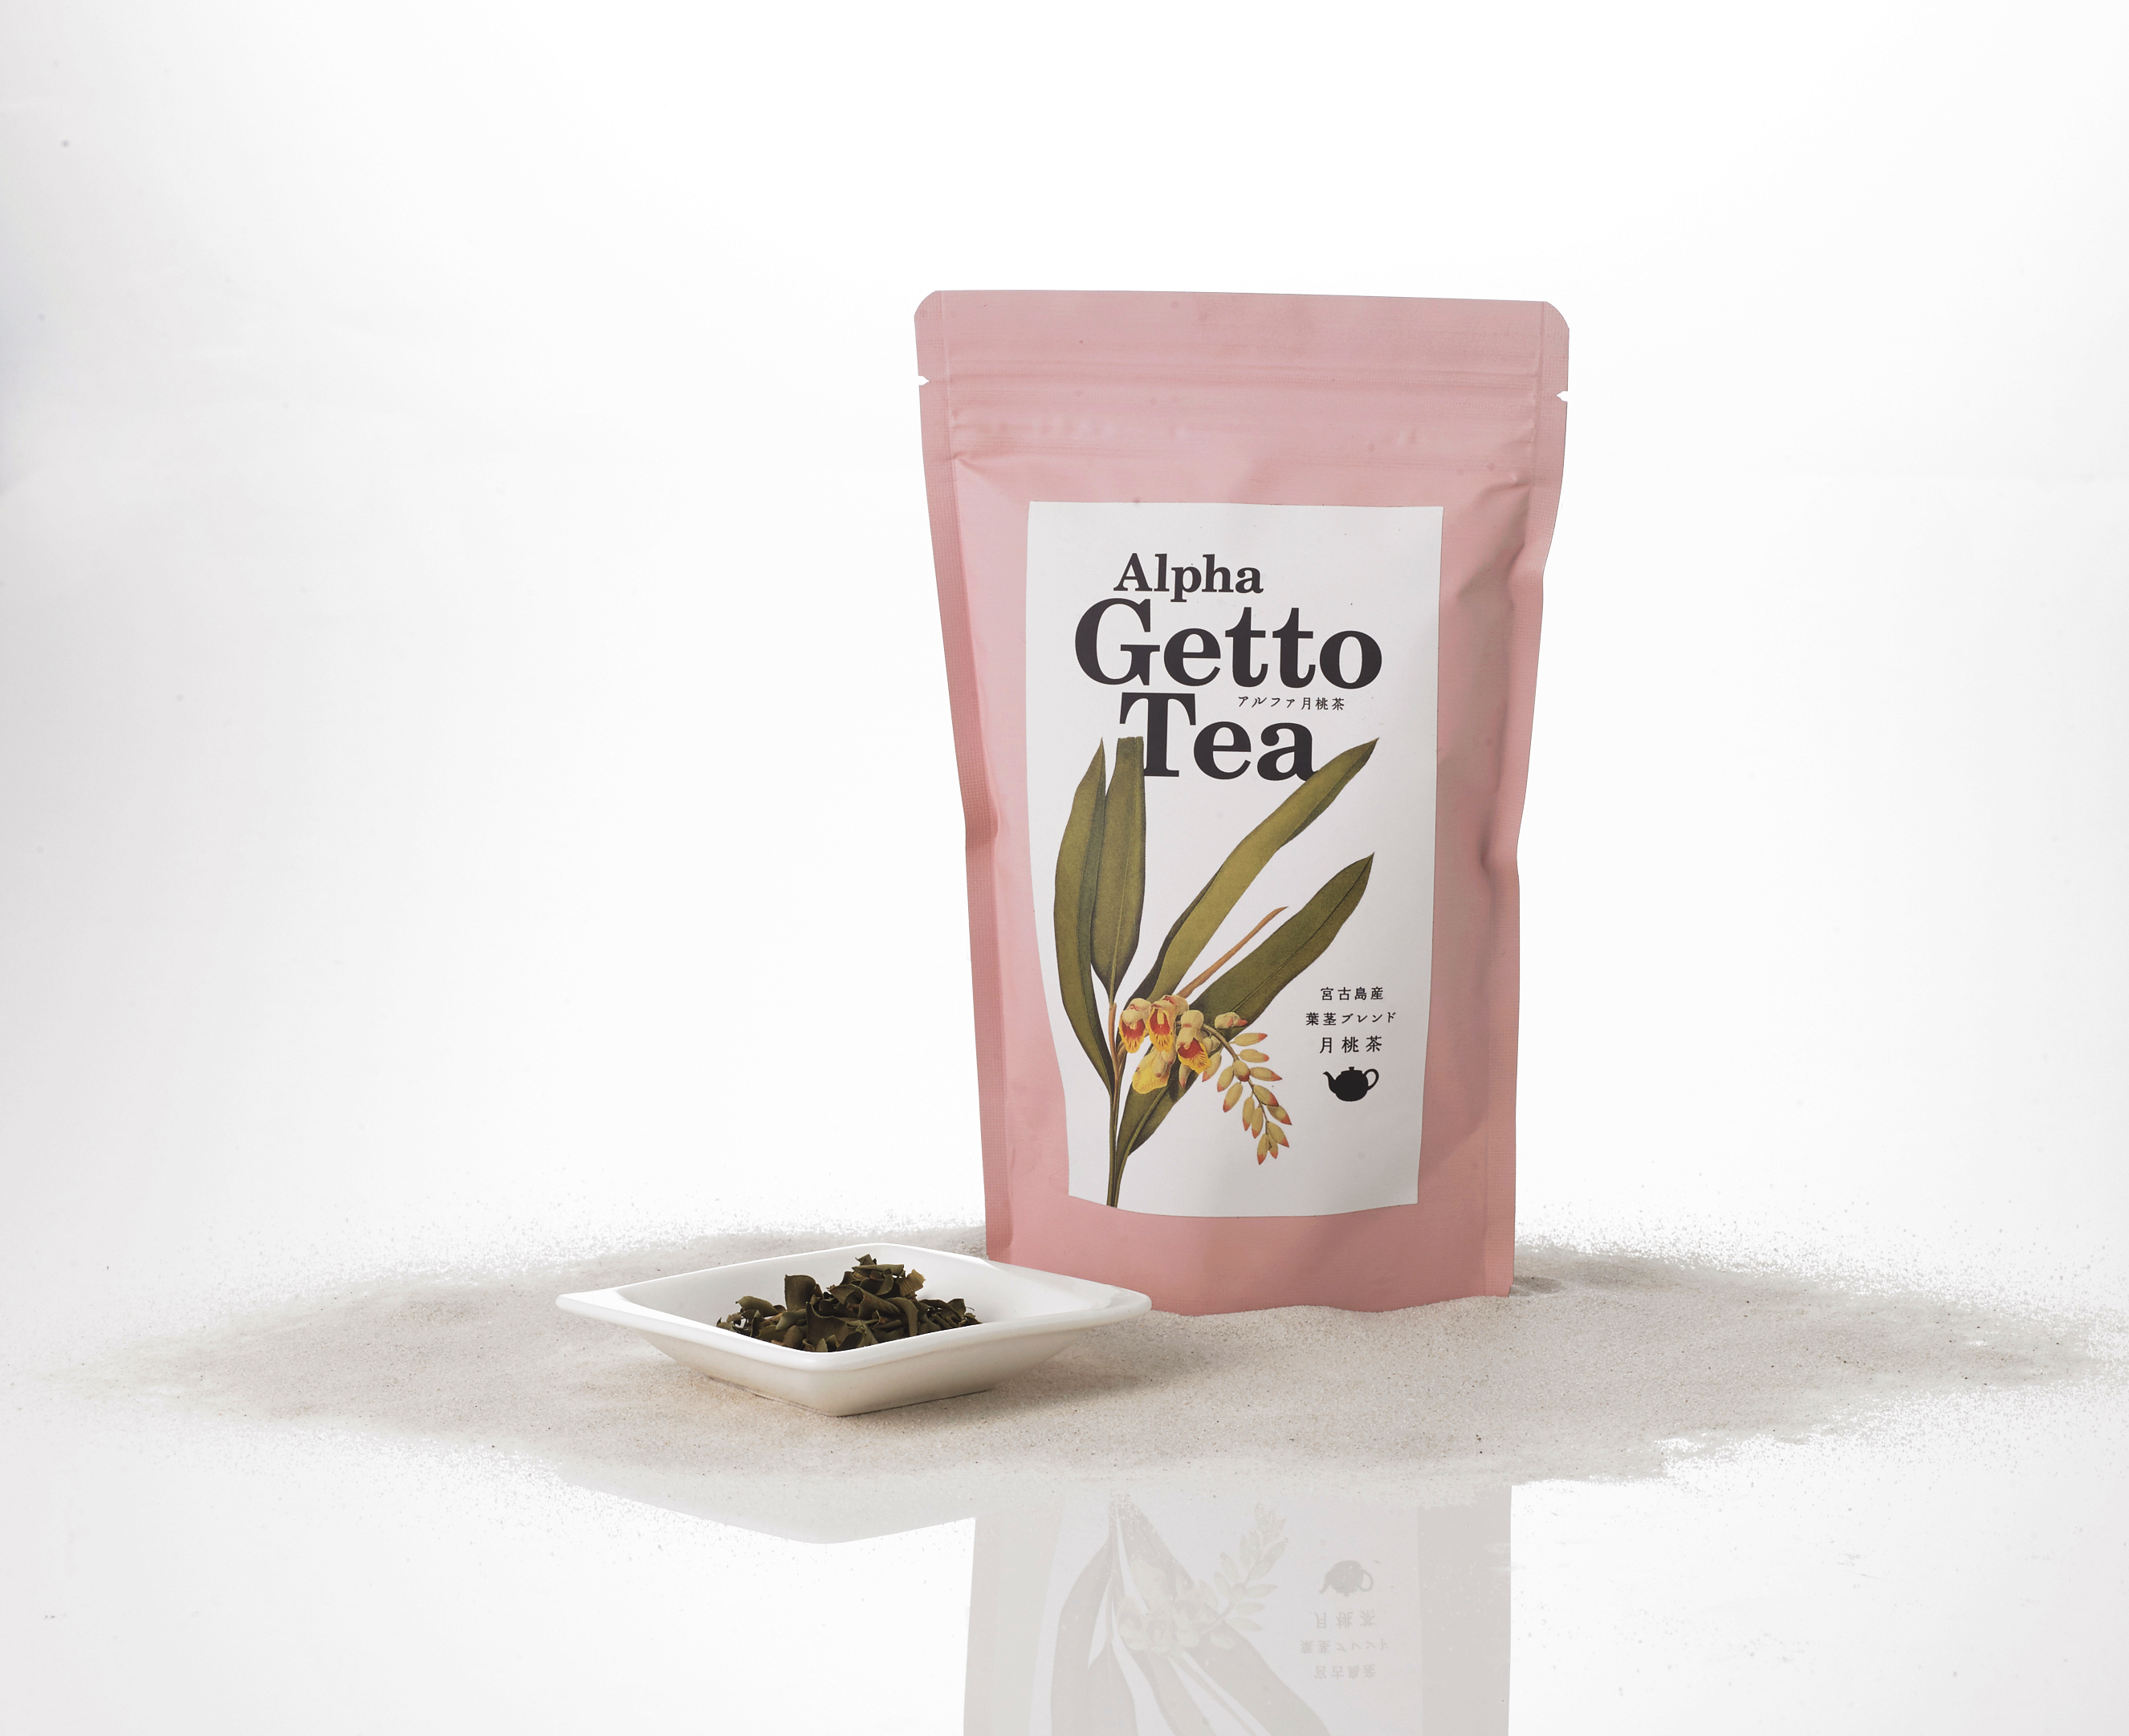 Buy Alpha ghetto tea (Alpha get to tea) from Japan - Buy authentic